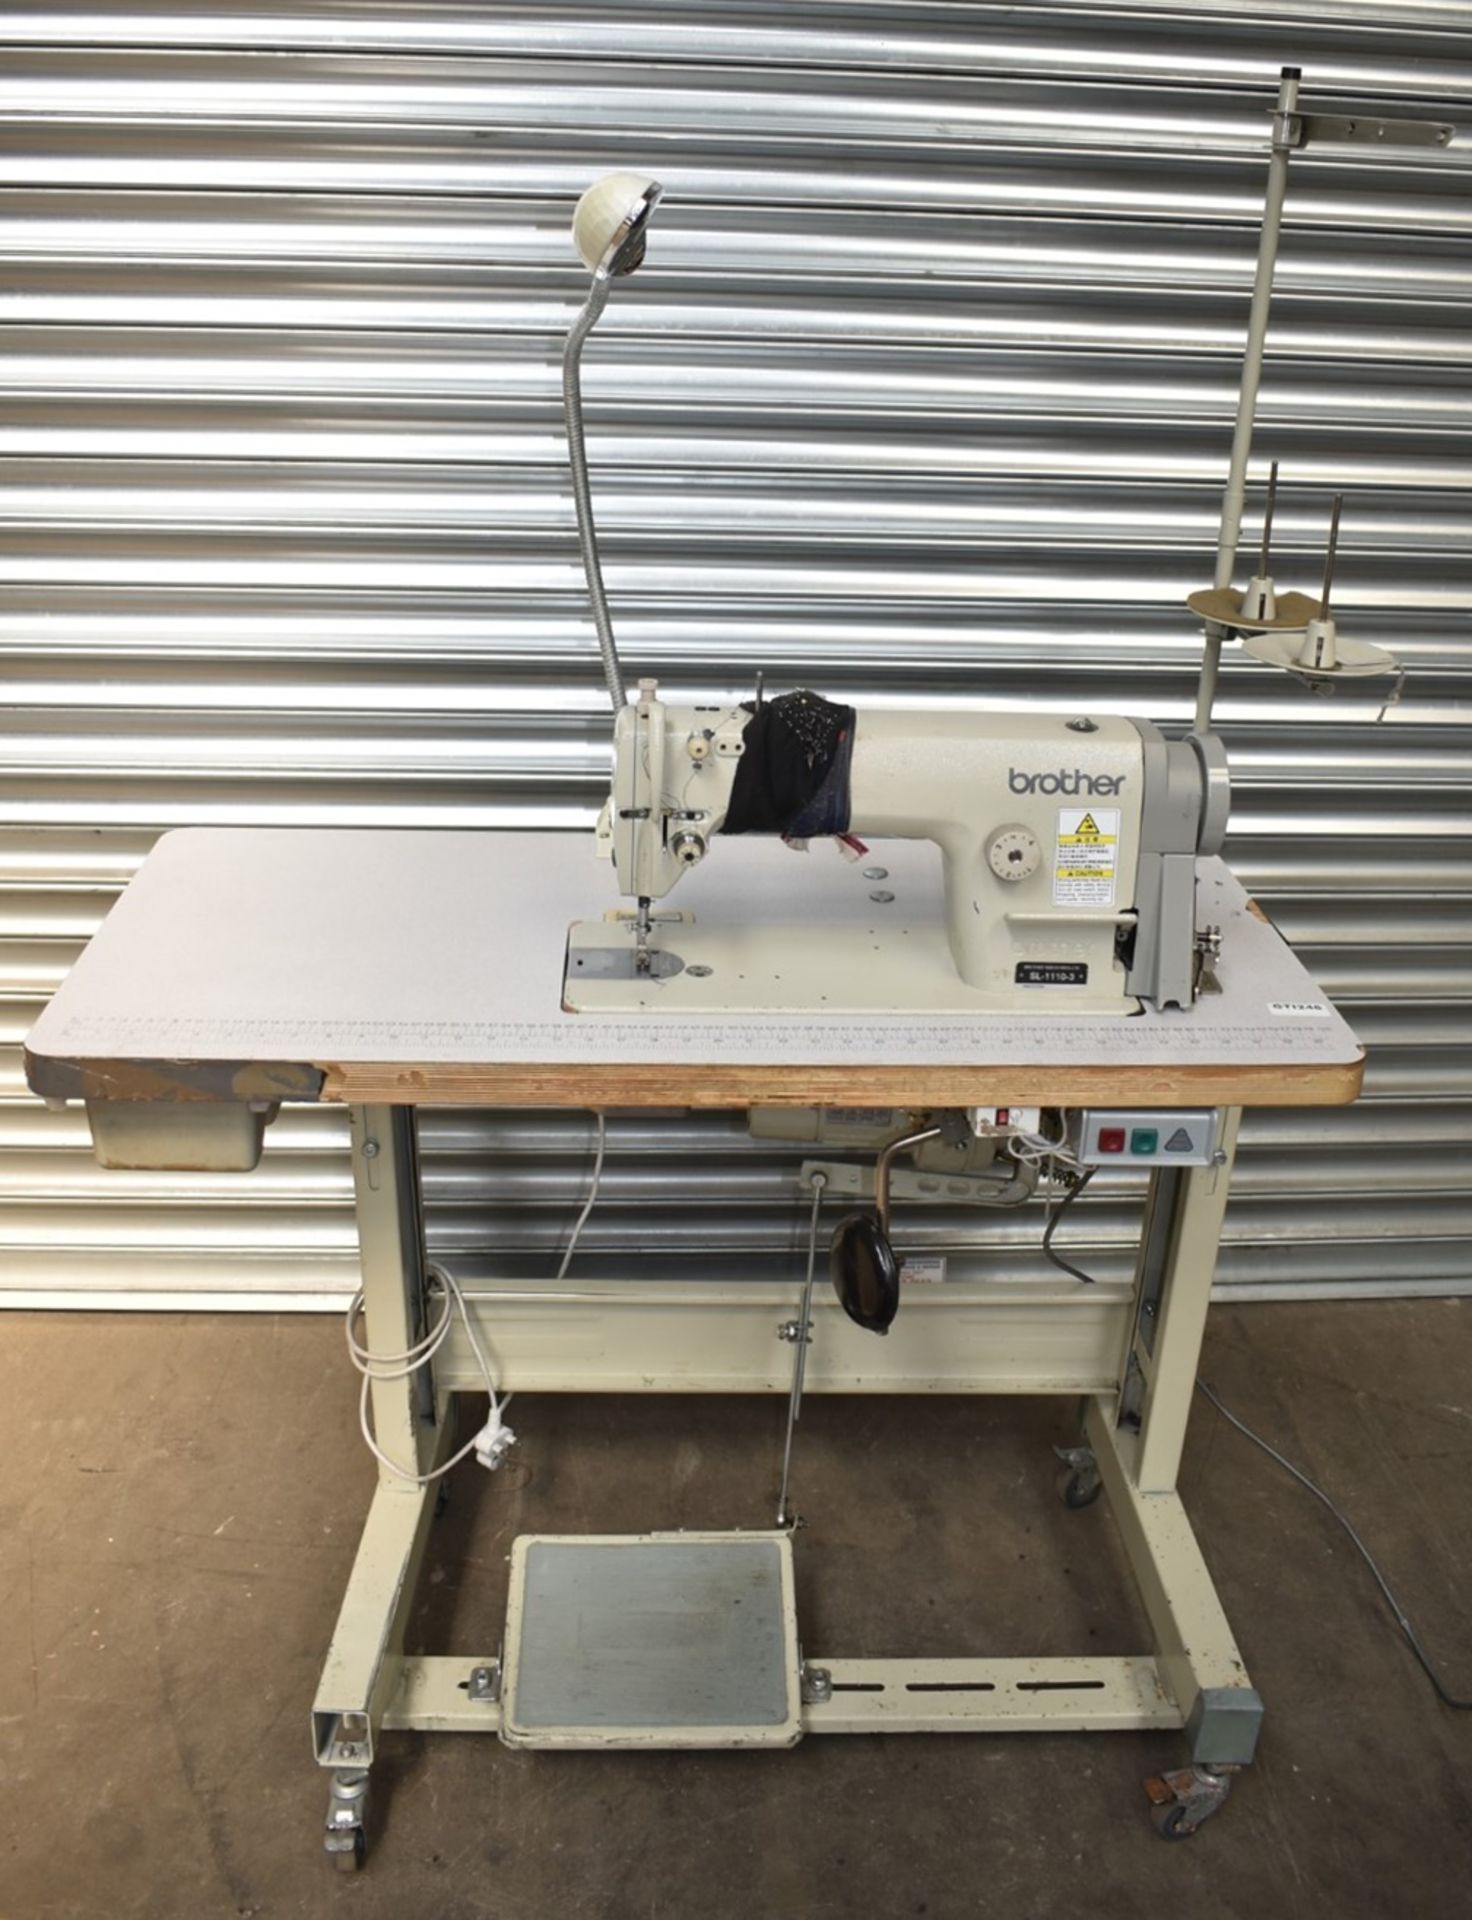 1 x Brother Lockstitch Industrial Sewing Machine - Model SL-1110-3